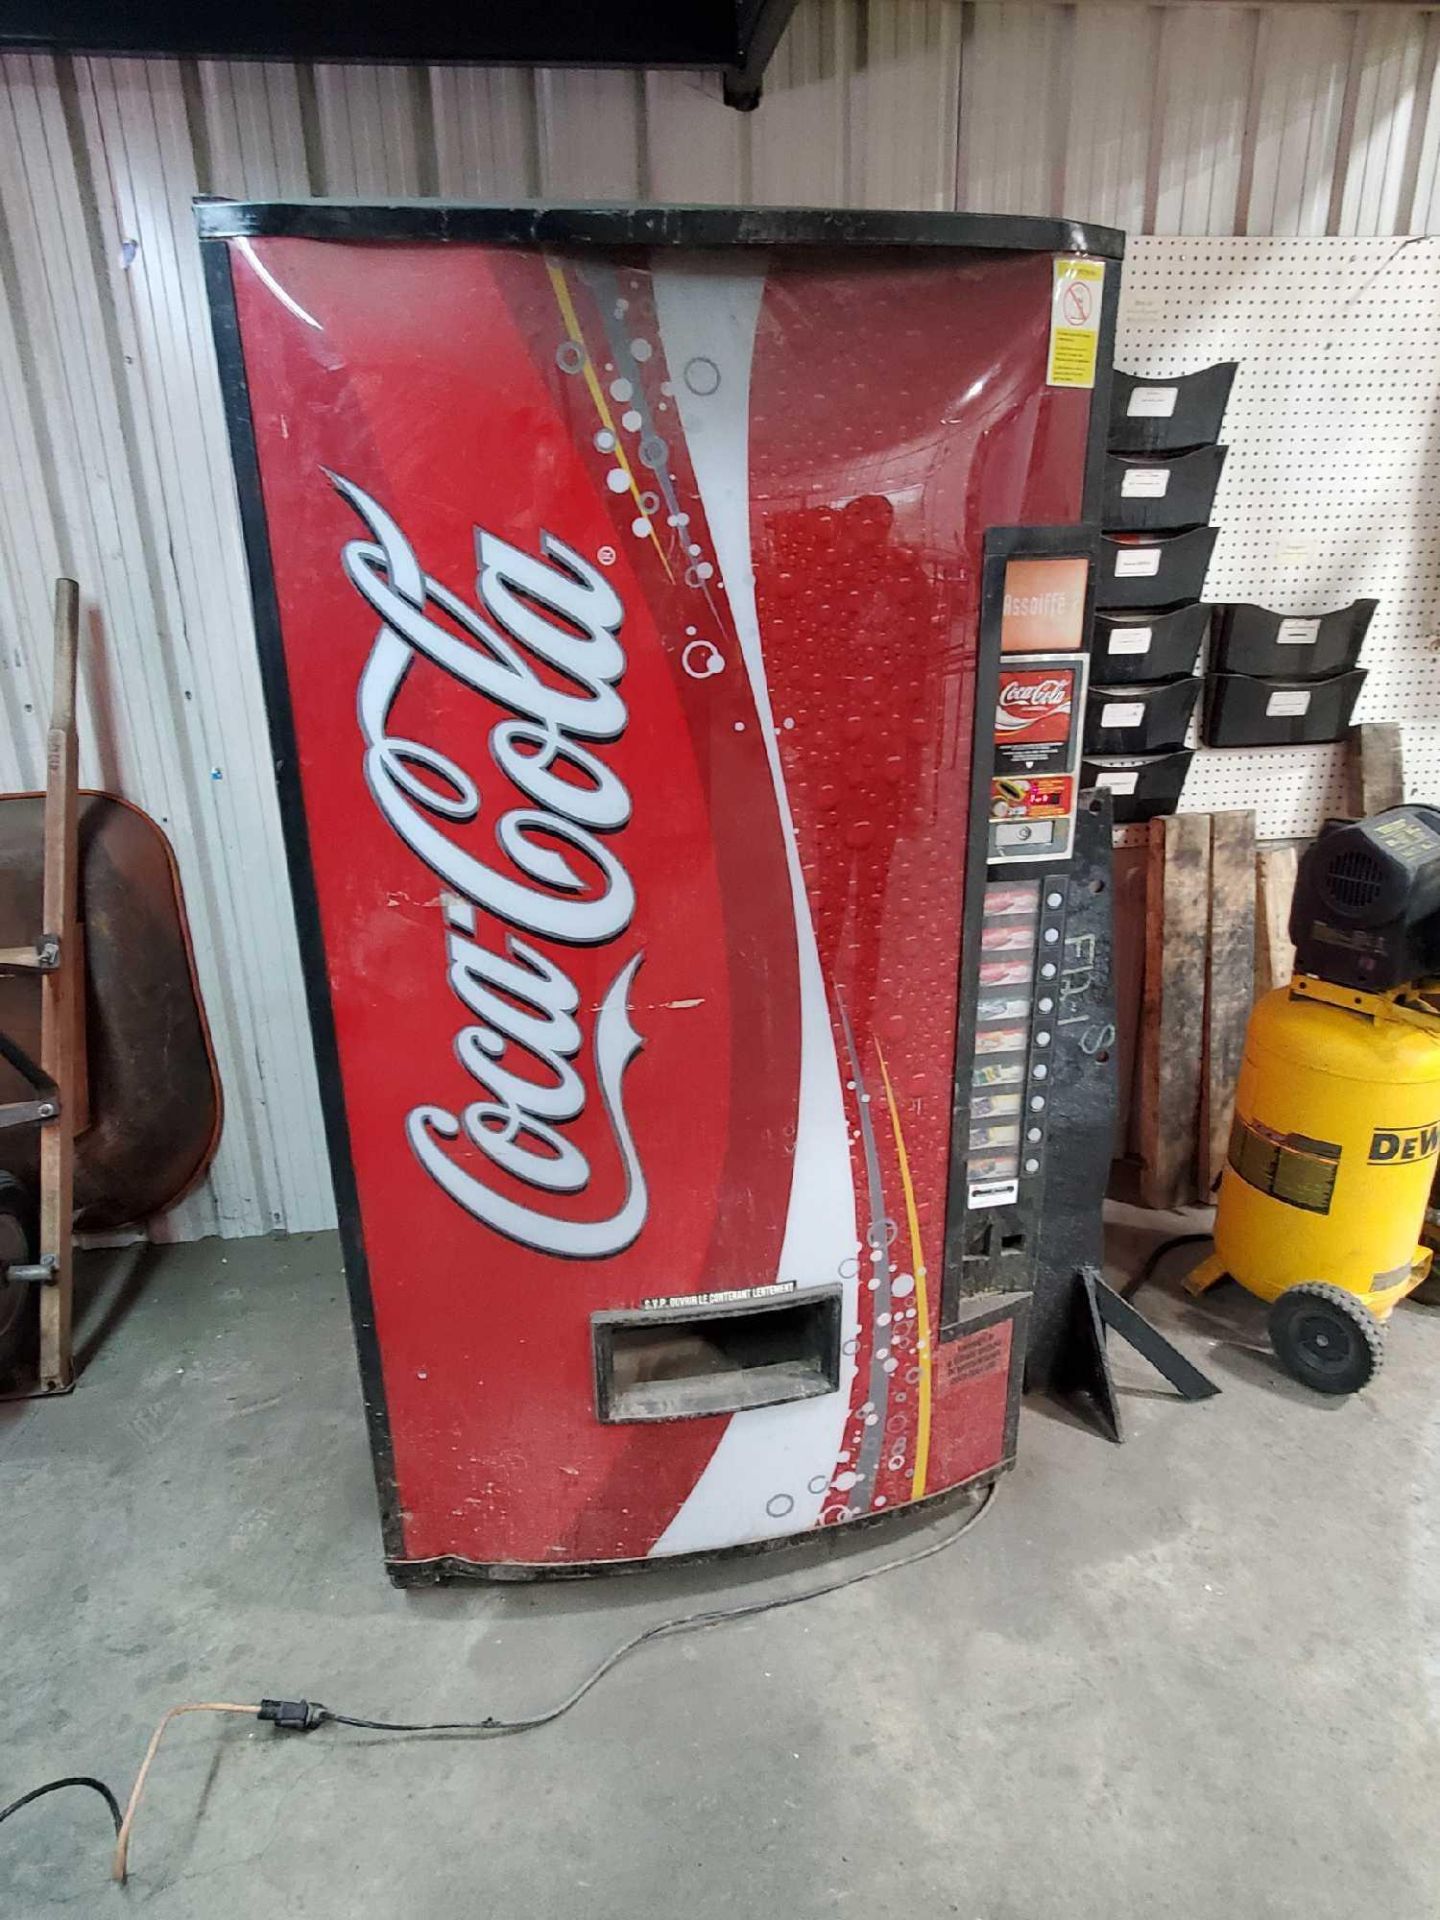 Coke vending machine / distributrice a boissons Coke